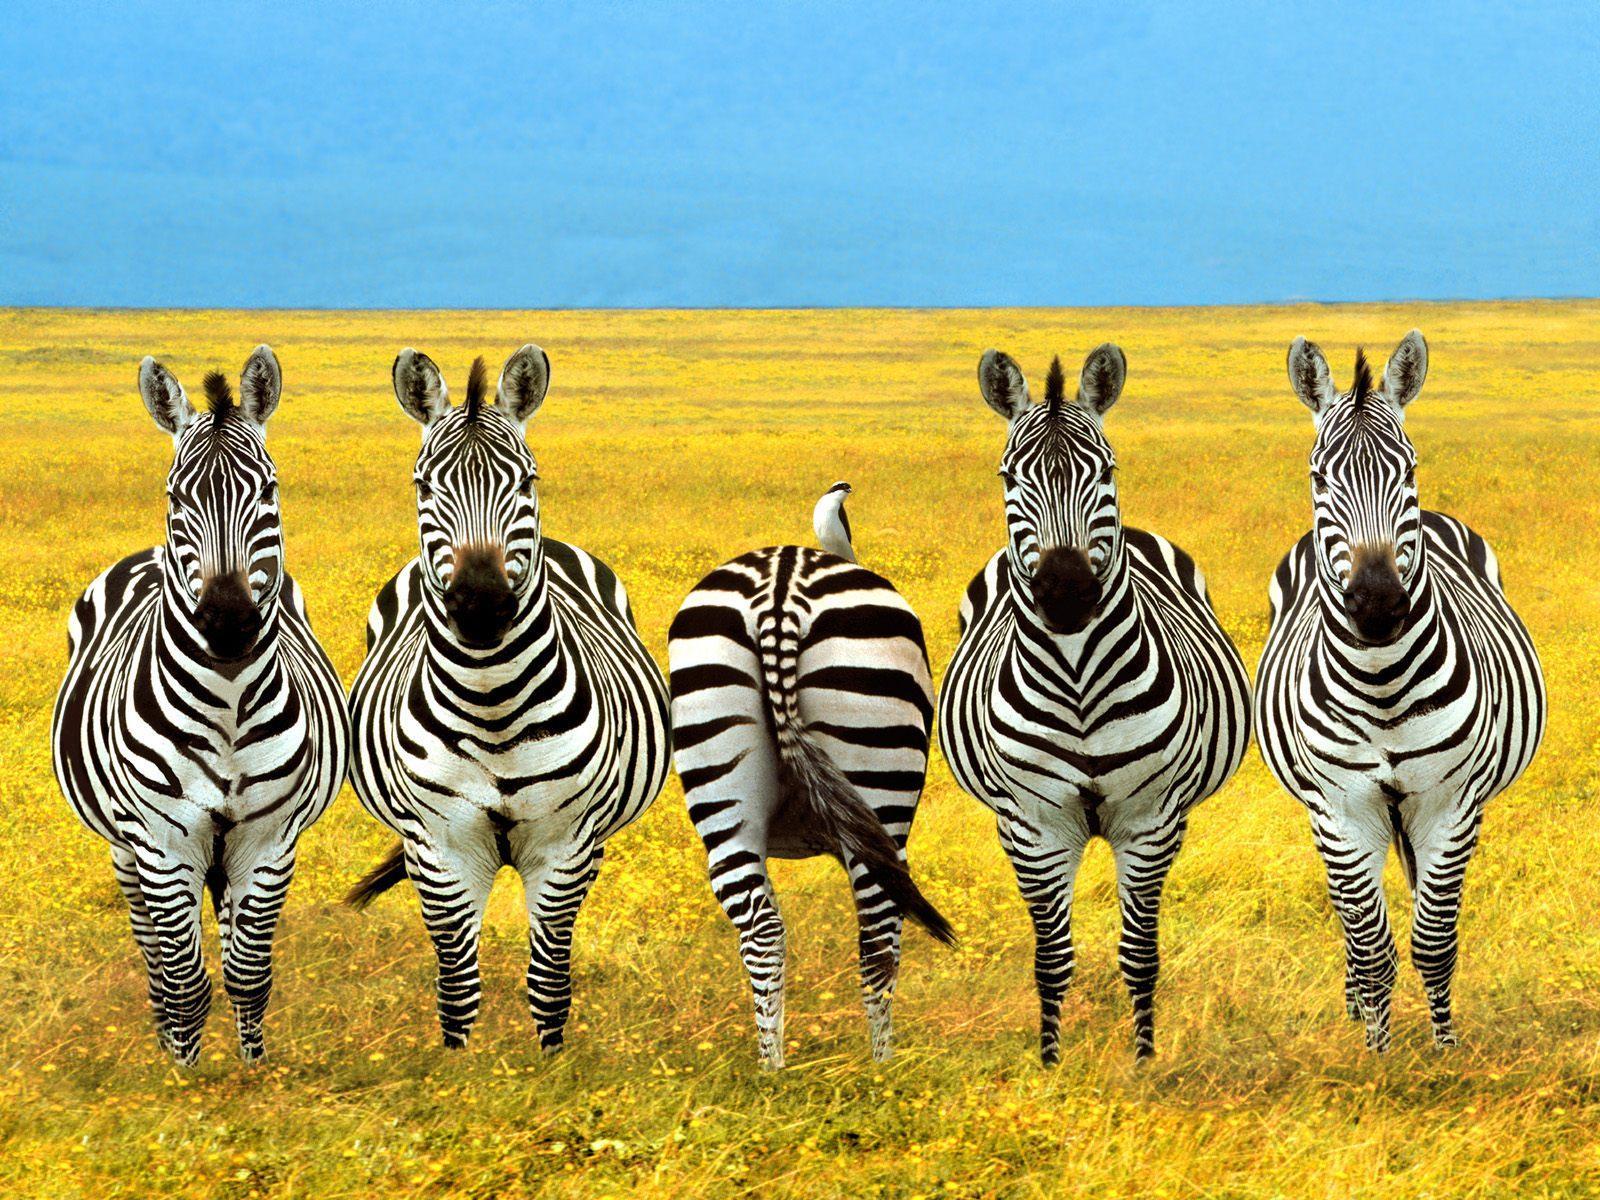 Zebras wallpaper free desktop background wallpaper image